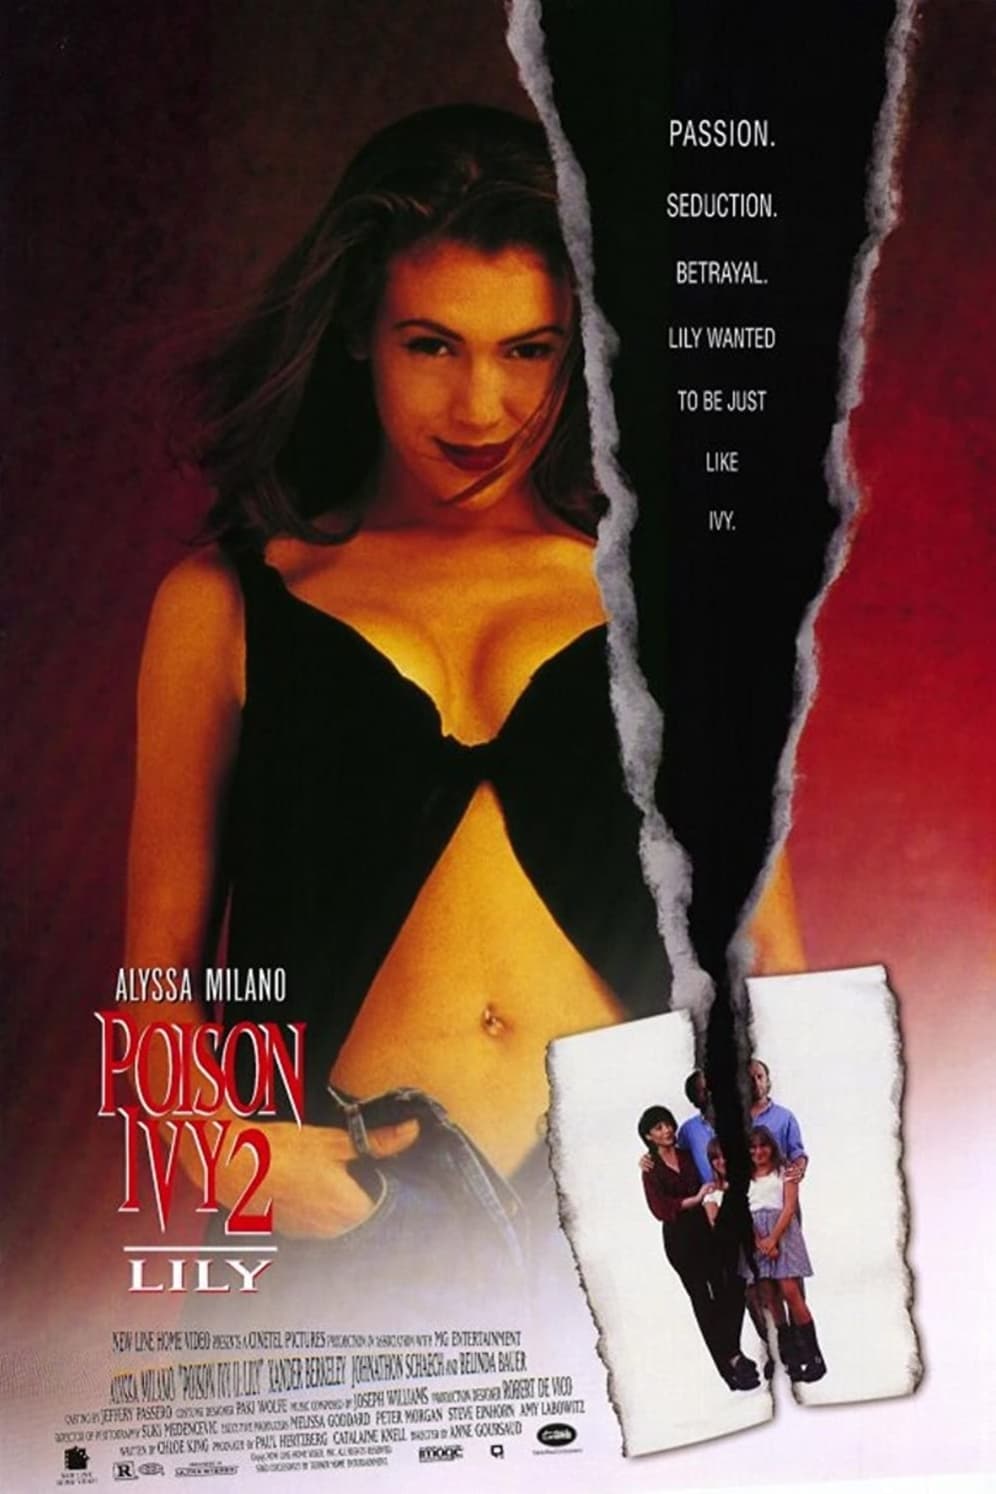 EN - Poison Ivy 2: Lily (1996)